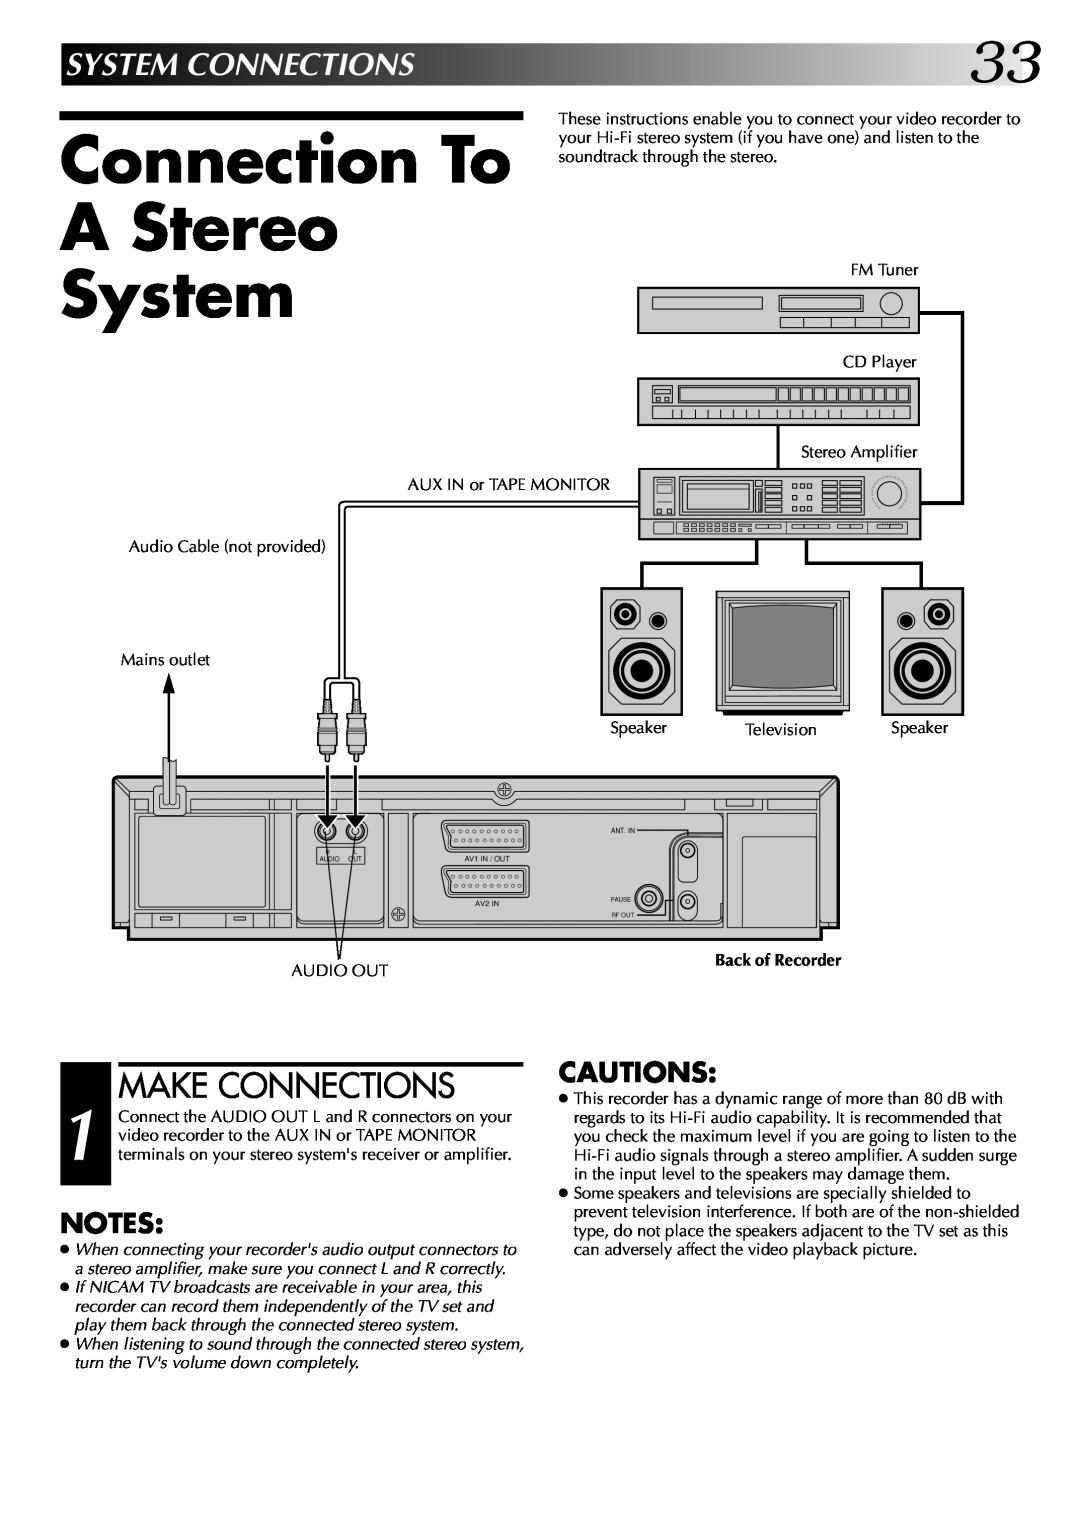 JVC HR-DD845EK setup guide Connection To A Stereo System, Systemconnections, Make Connections, Cautions 